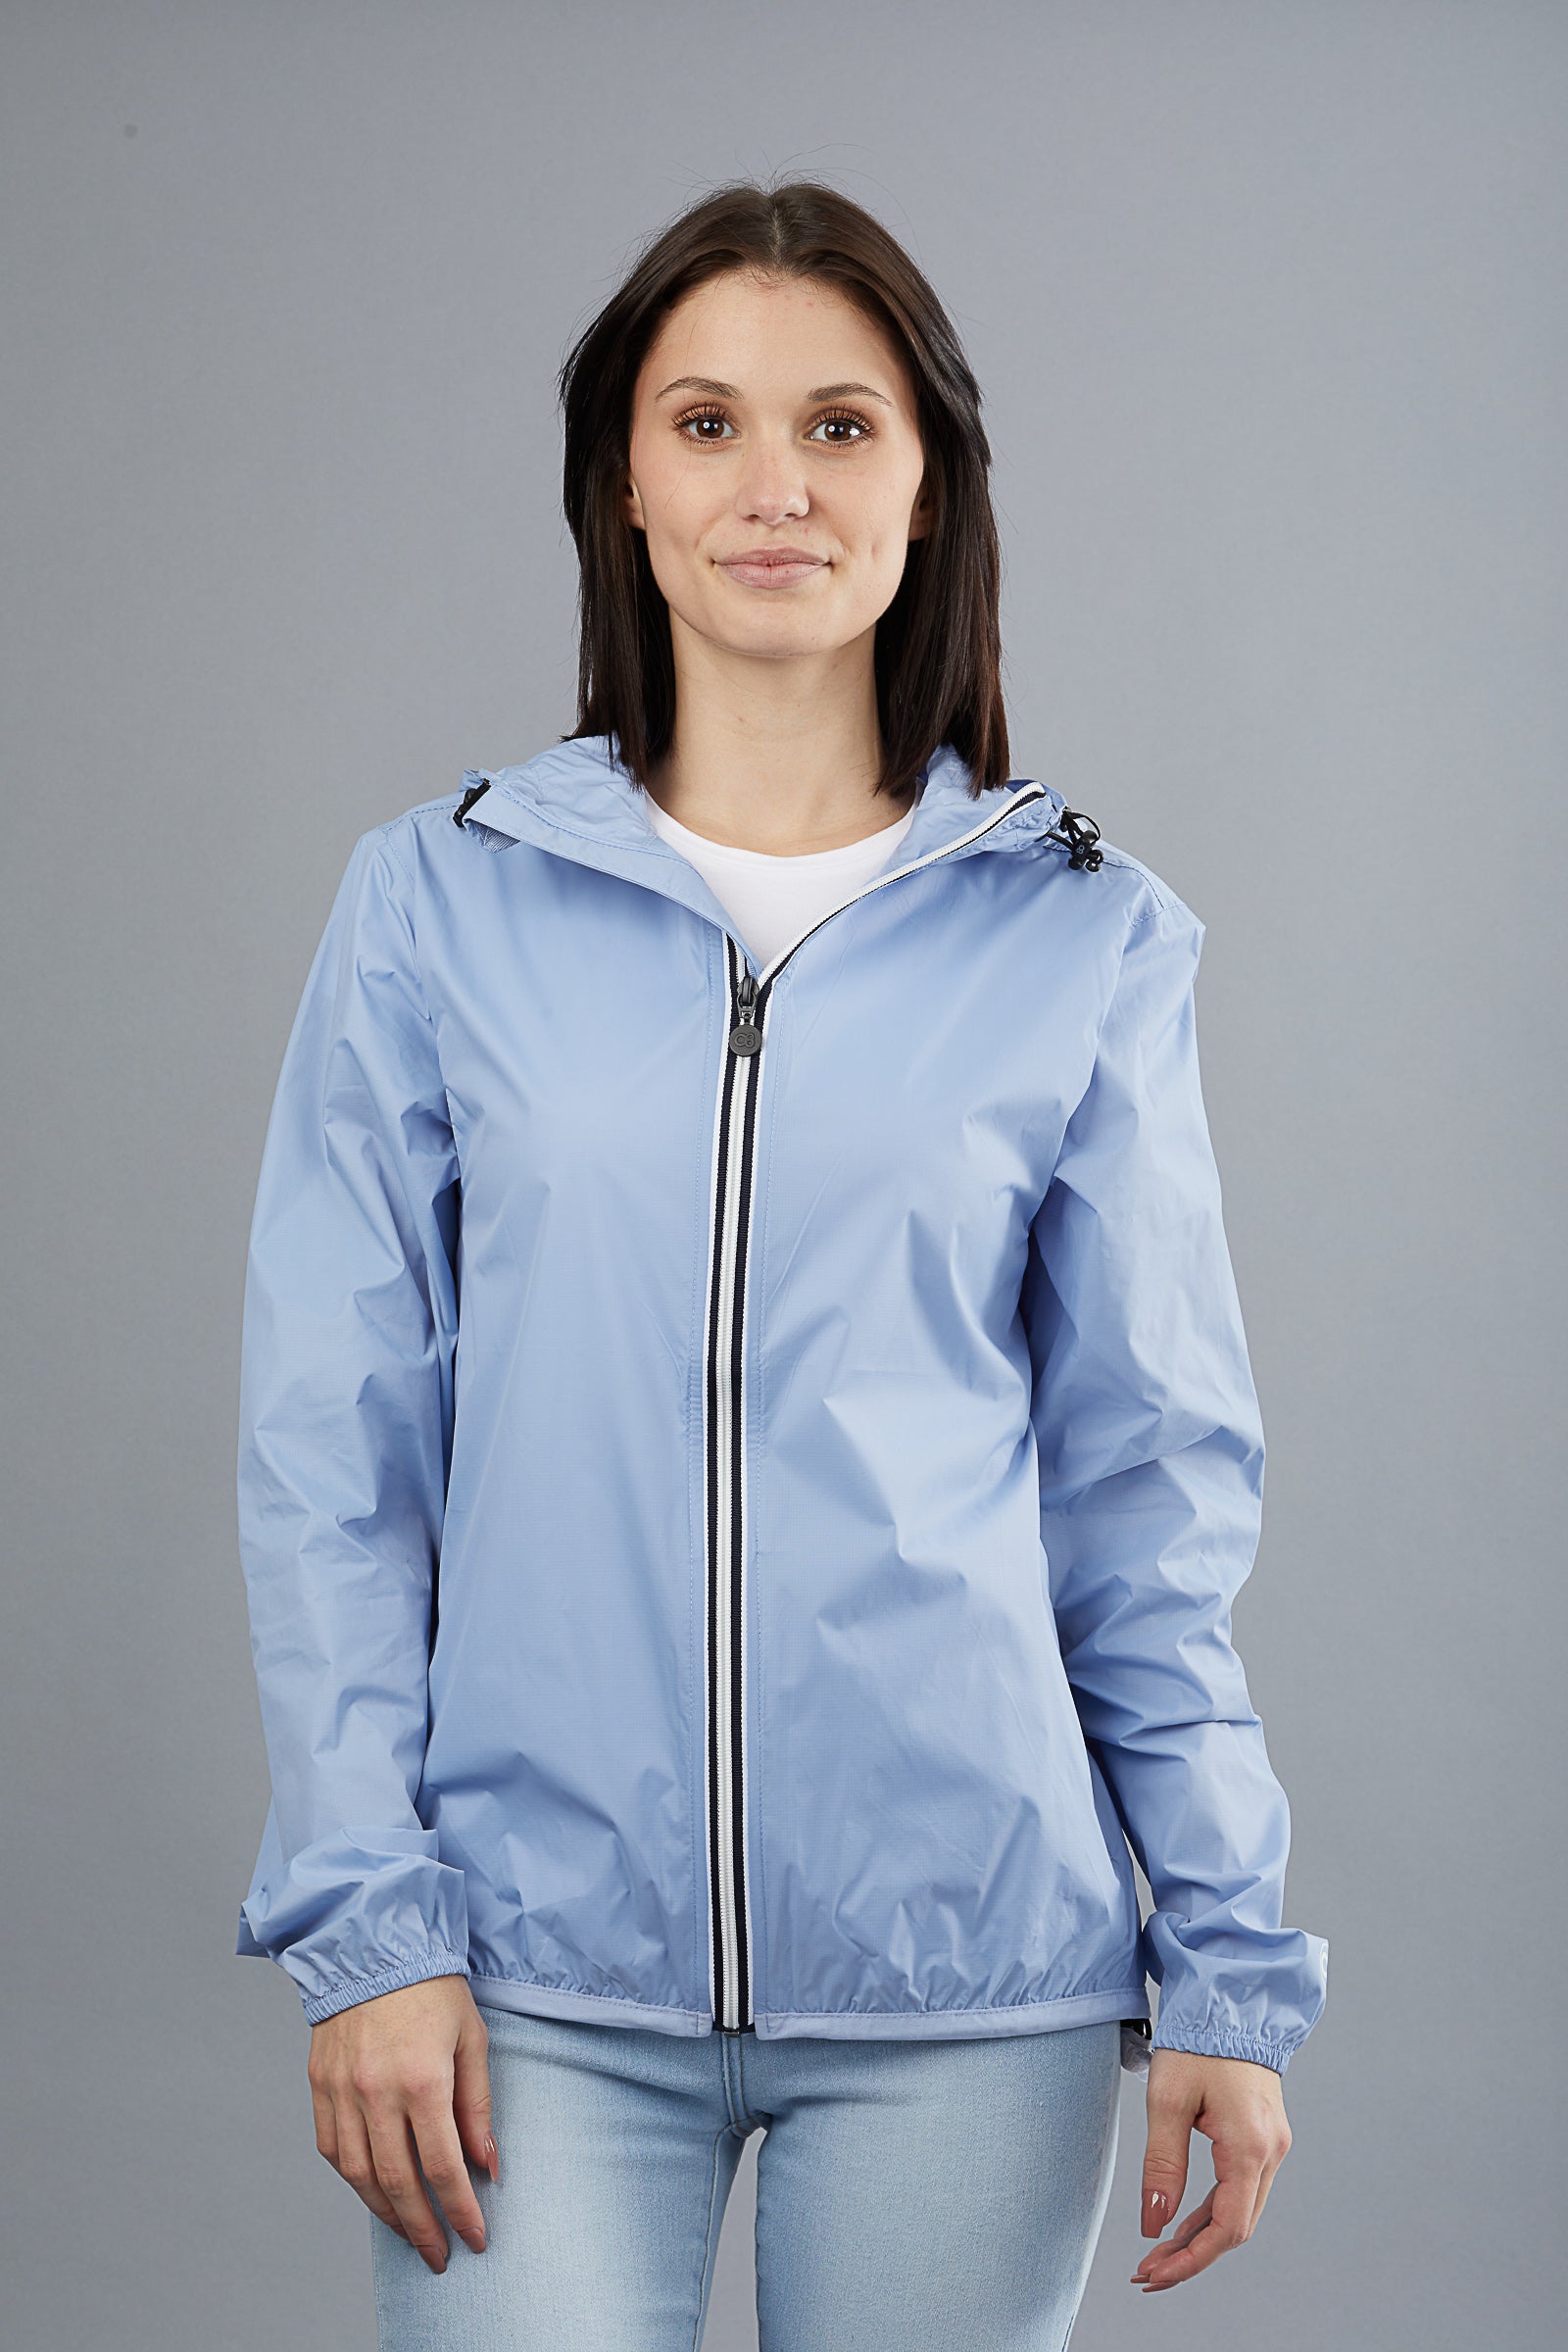 Powder blue full zip packable rain jacket and windbreaker